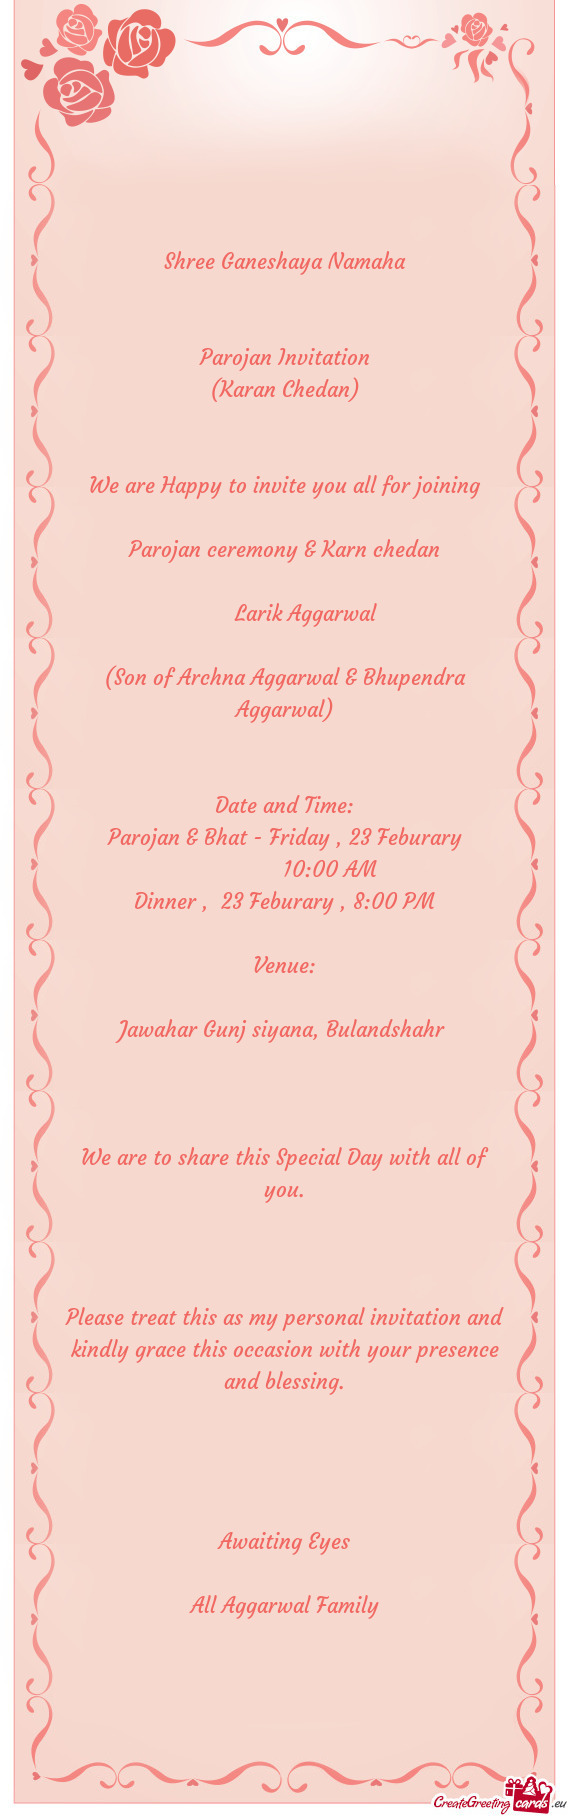 Parojan & Bhat - Friday , 23 Feburary